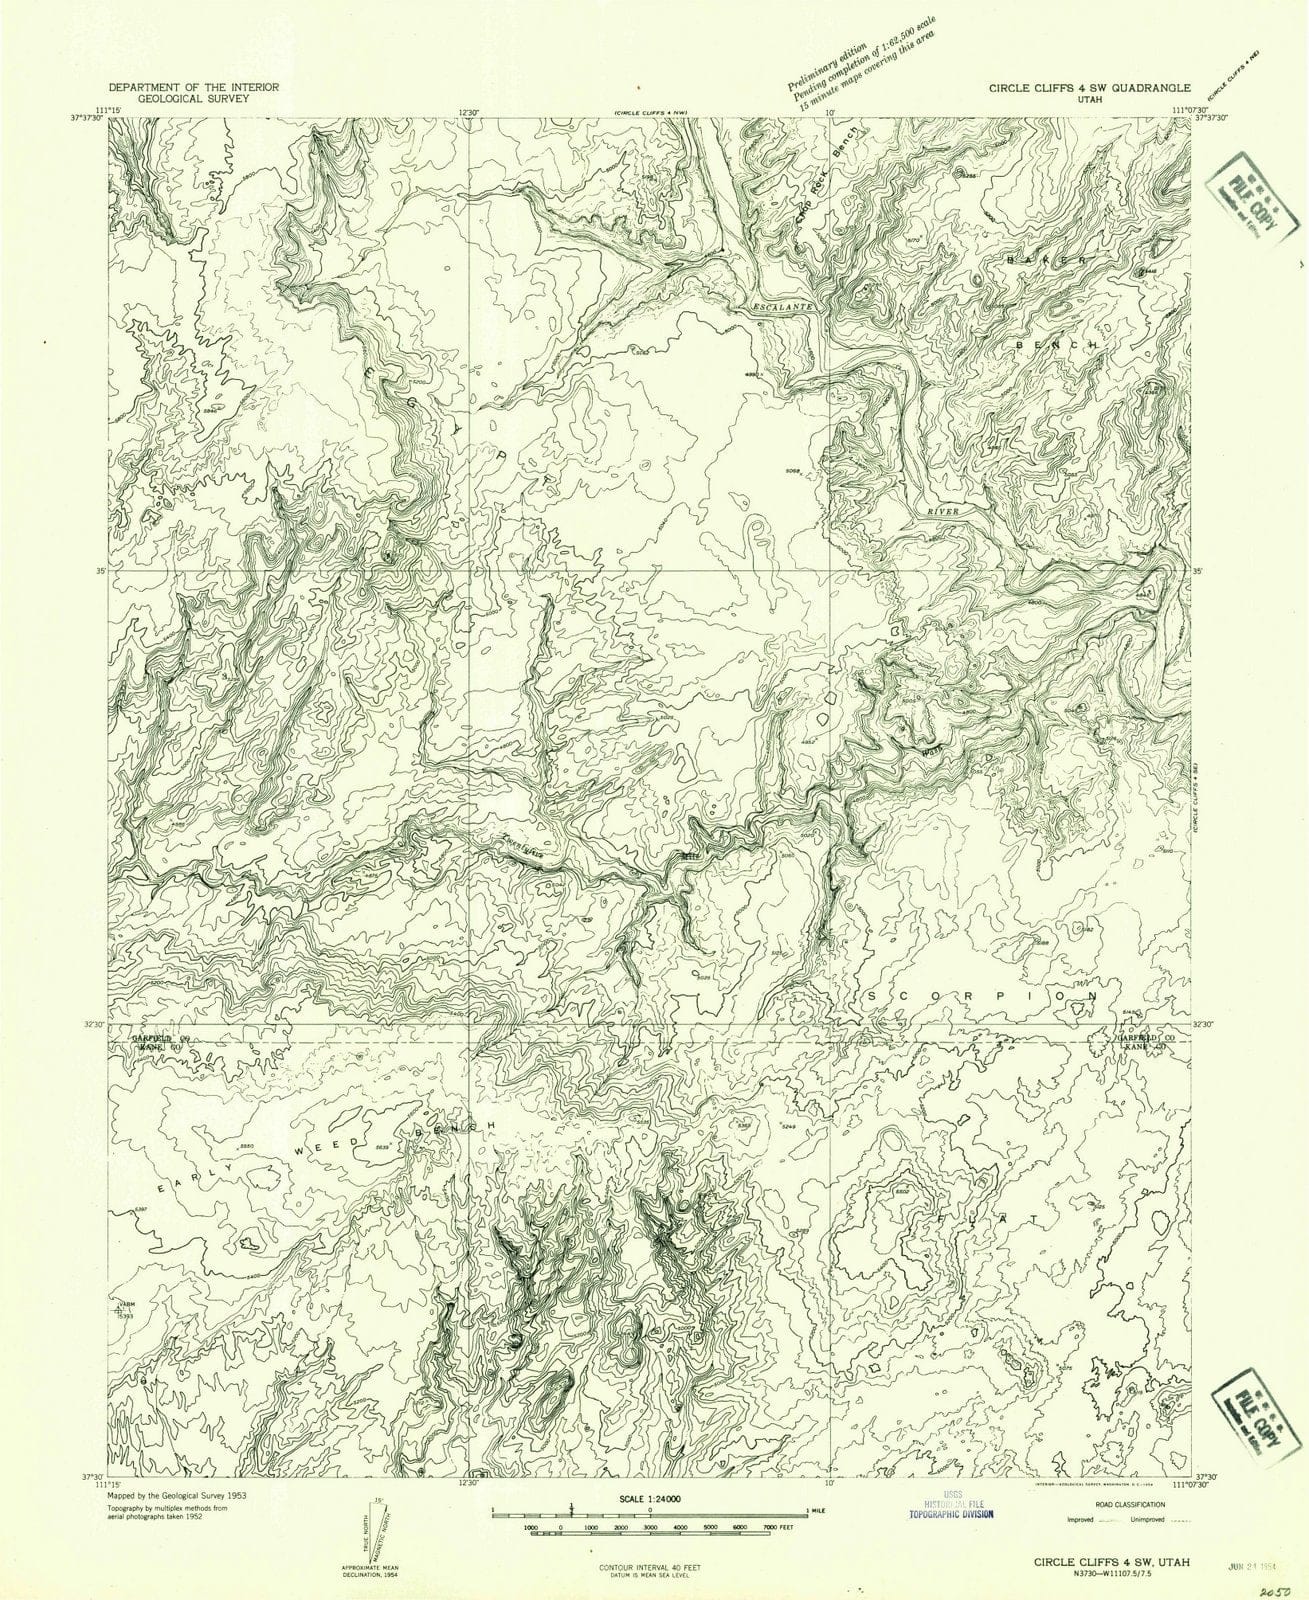 1953 Circle Cliffs 4, UT - Utah - USGS Topographic Map v3